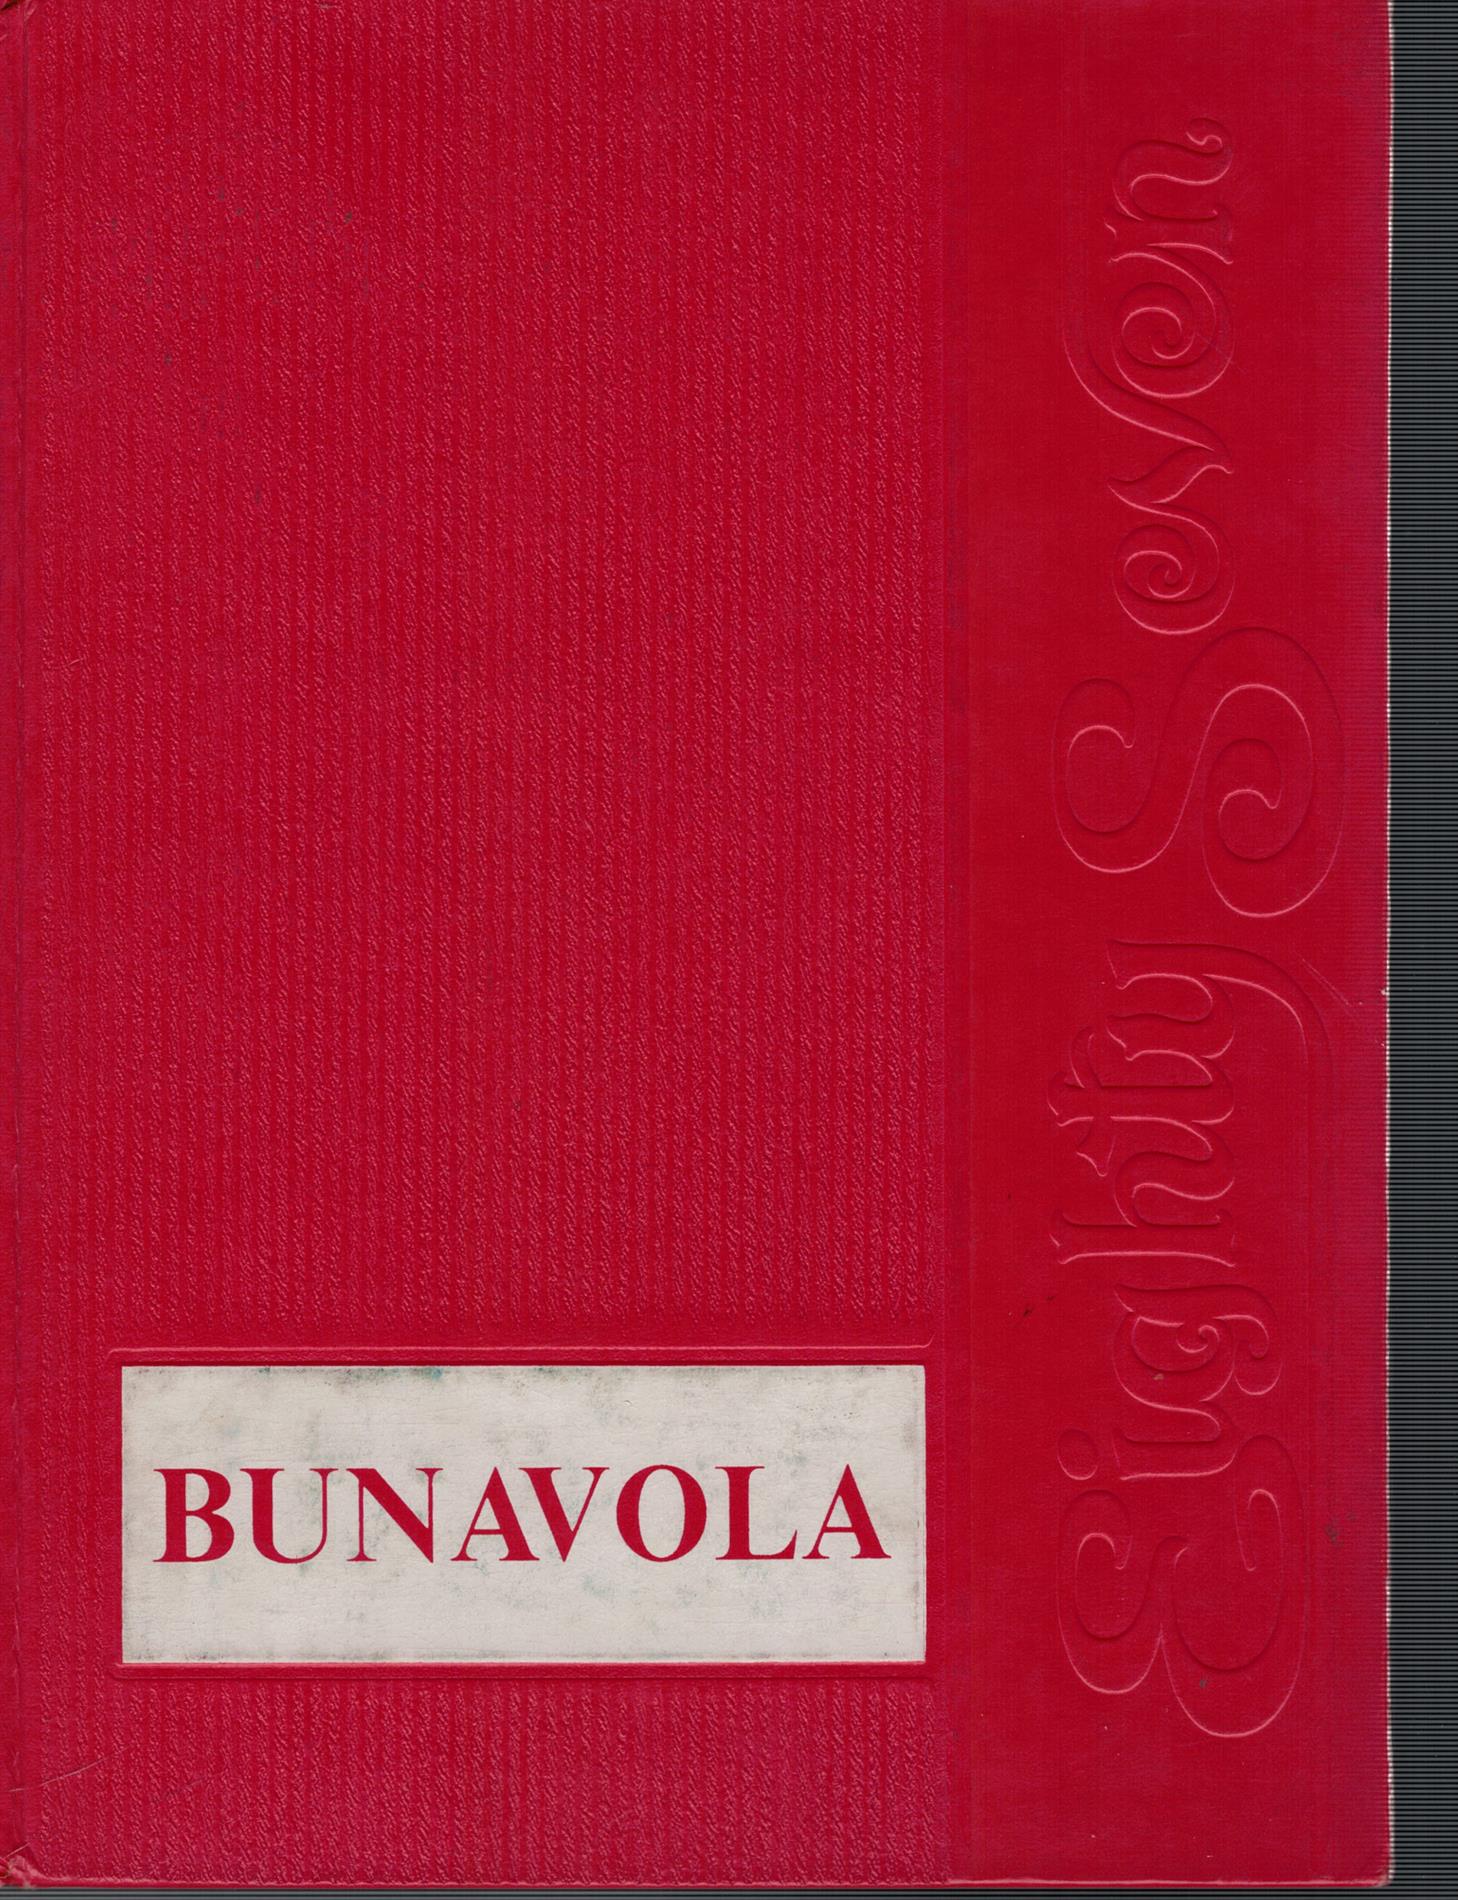 1987 Bunavola